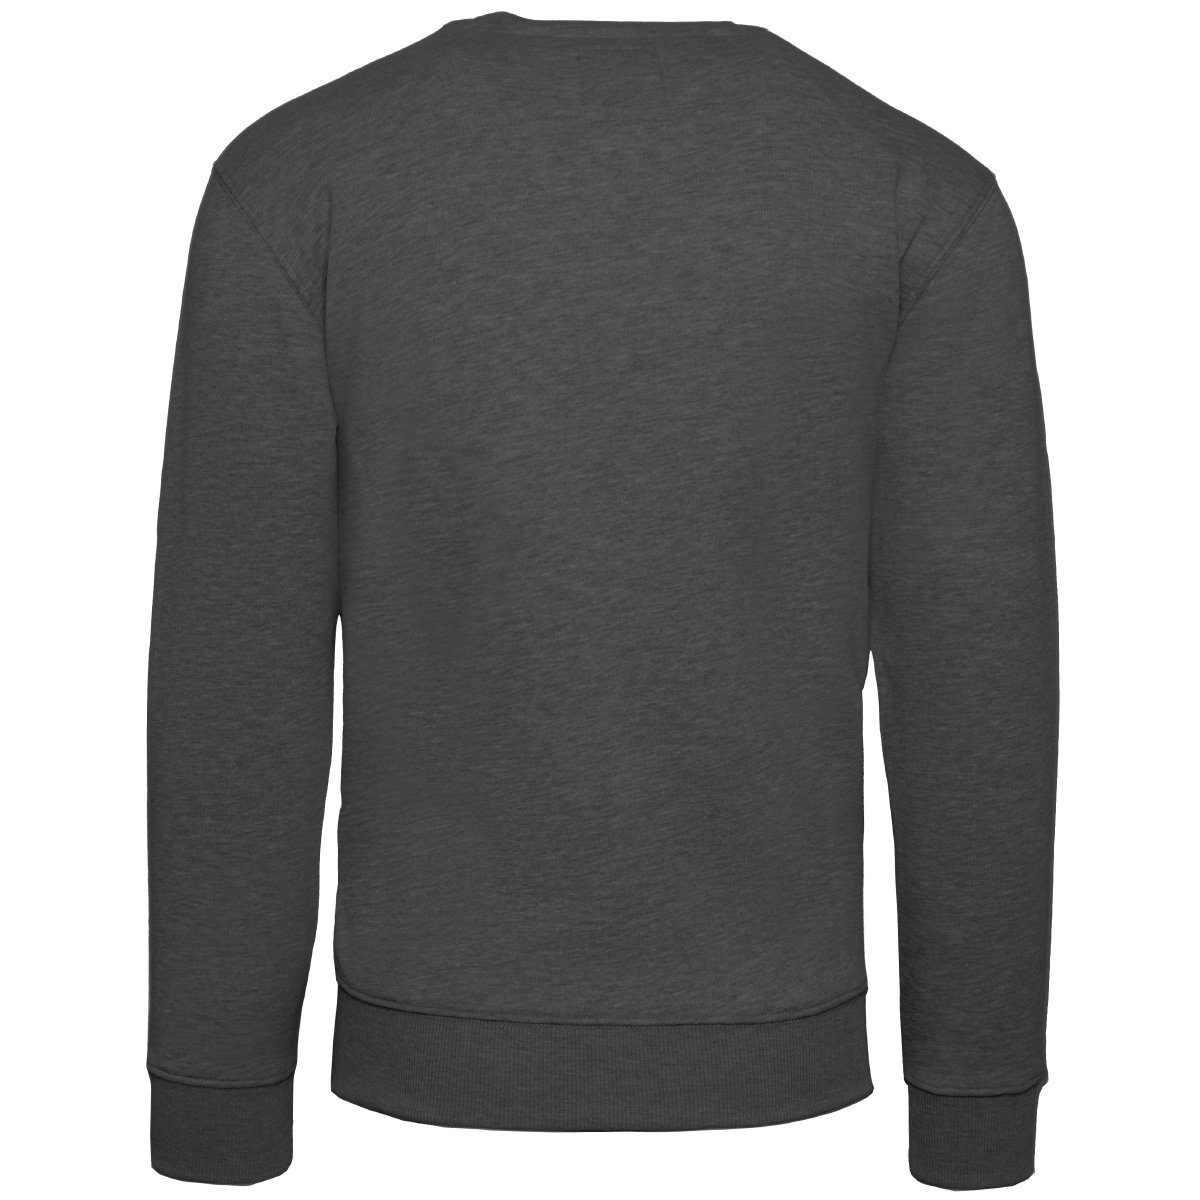 Sweatshirt Sweater Basic Industries Herren Alpha grau